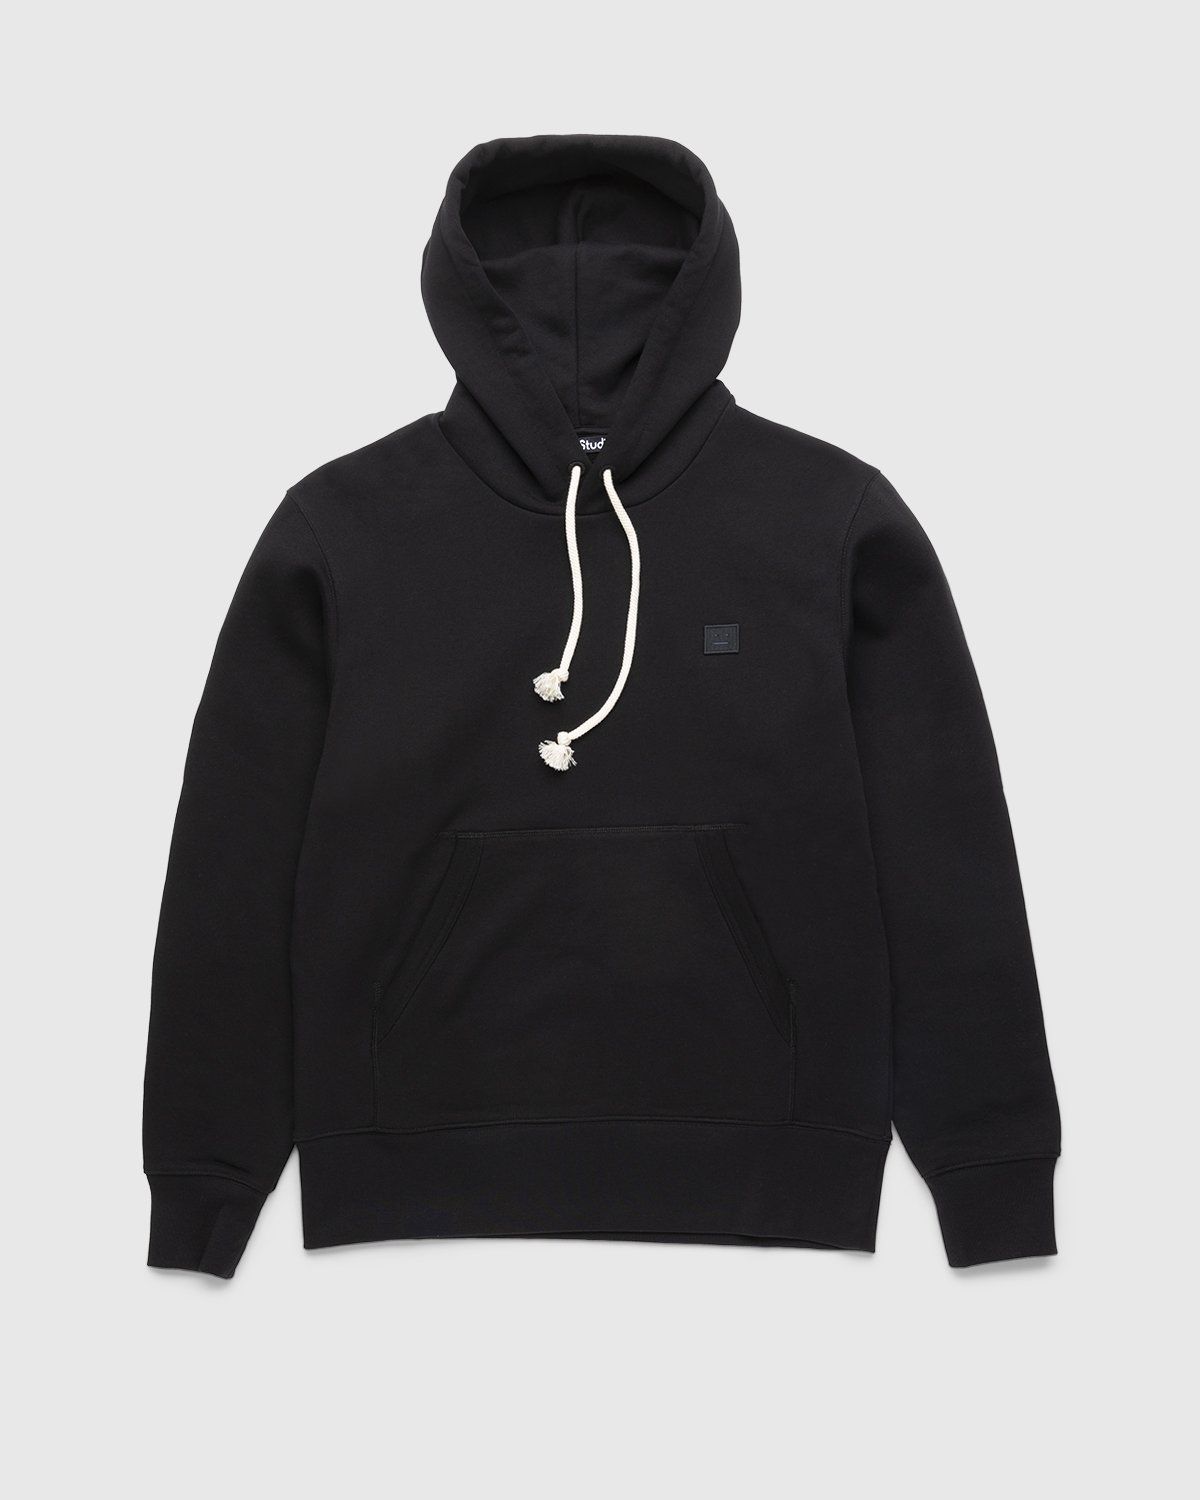 Acne Studios – Organic Cotton Hooded Sweatshirt Black - Hoodies - Black - Image 1